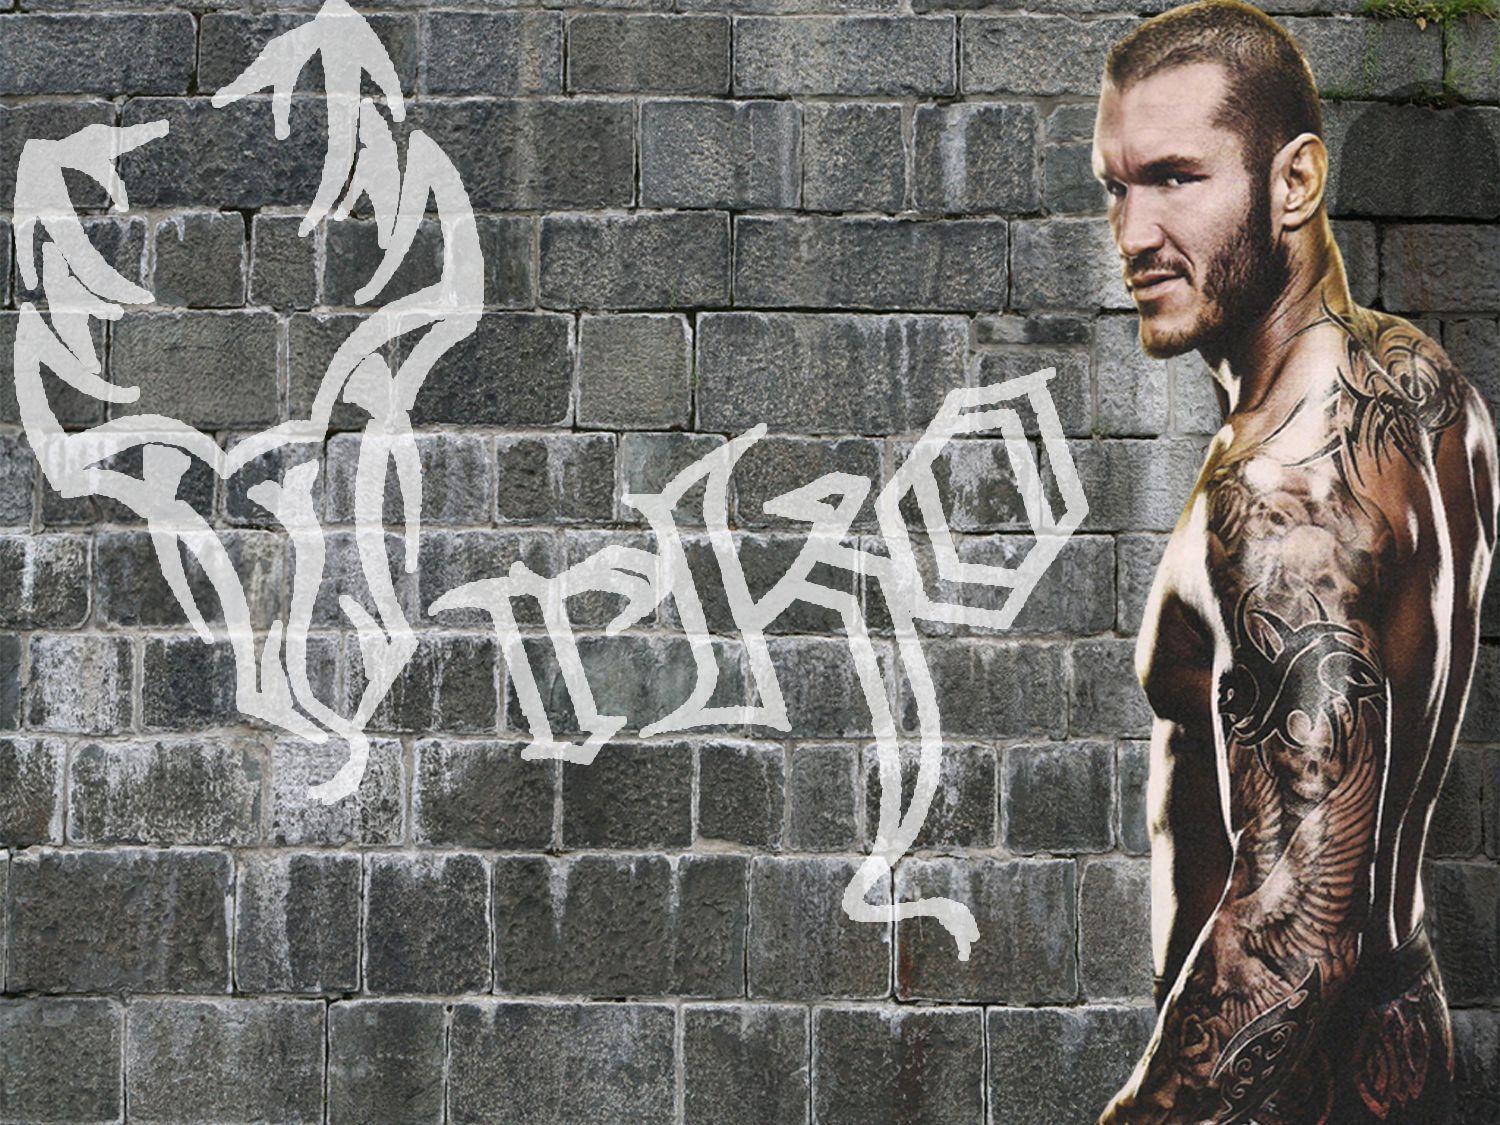 Graphic Break: Randy Orton “Paint” Wallpaper. Keep Calm & Watch